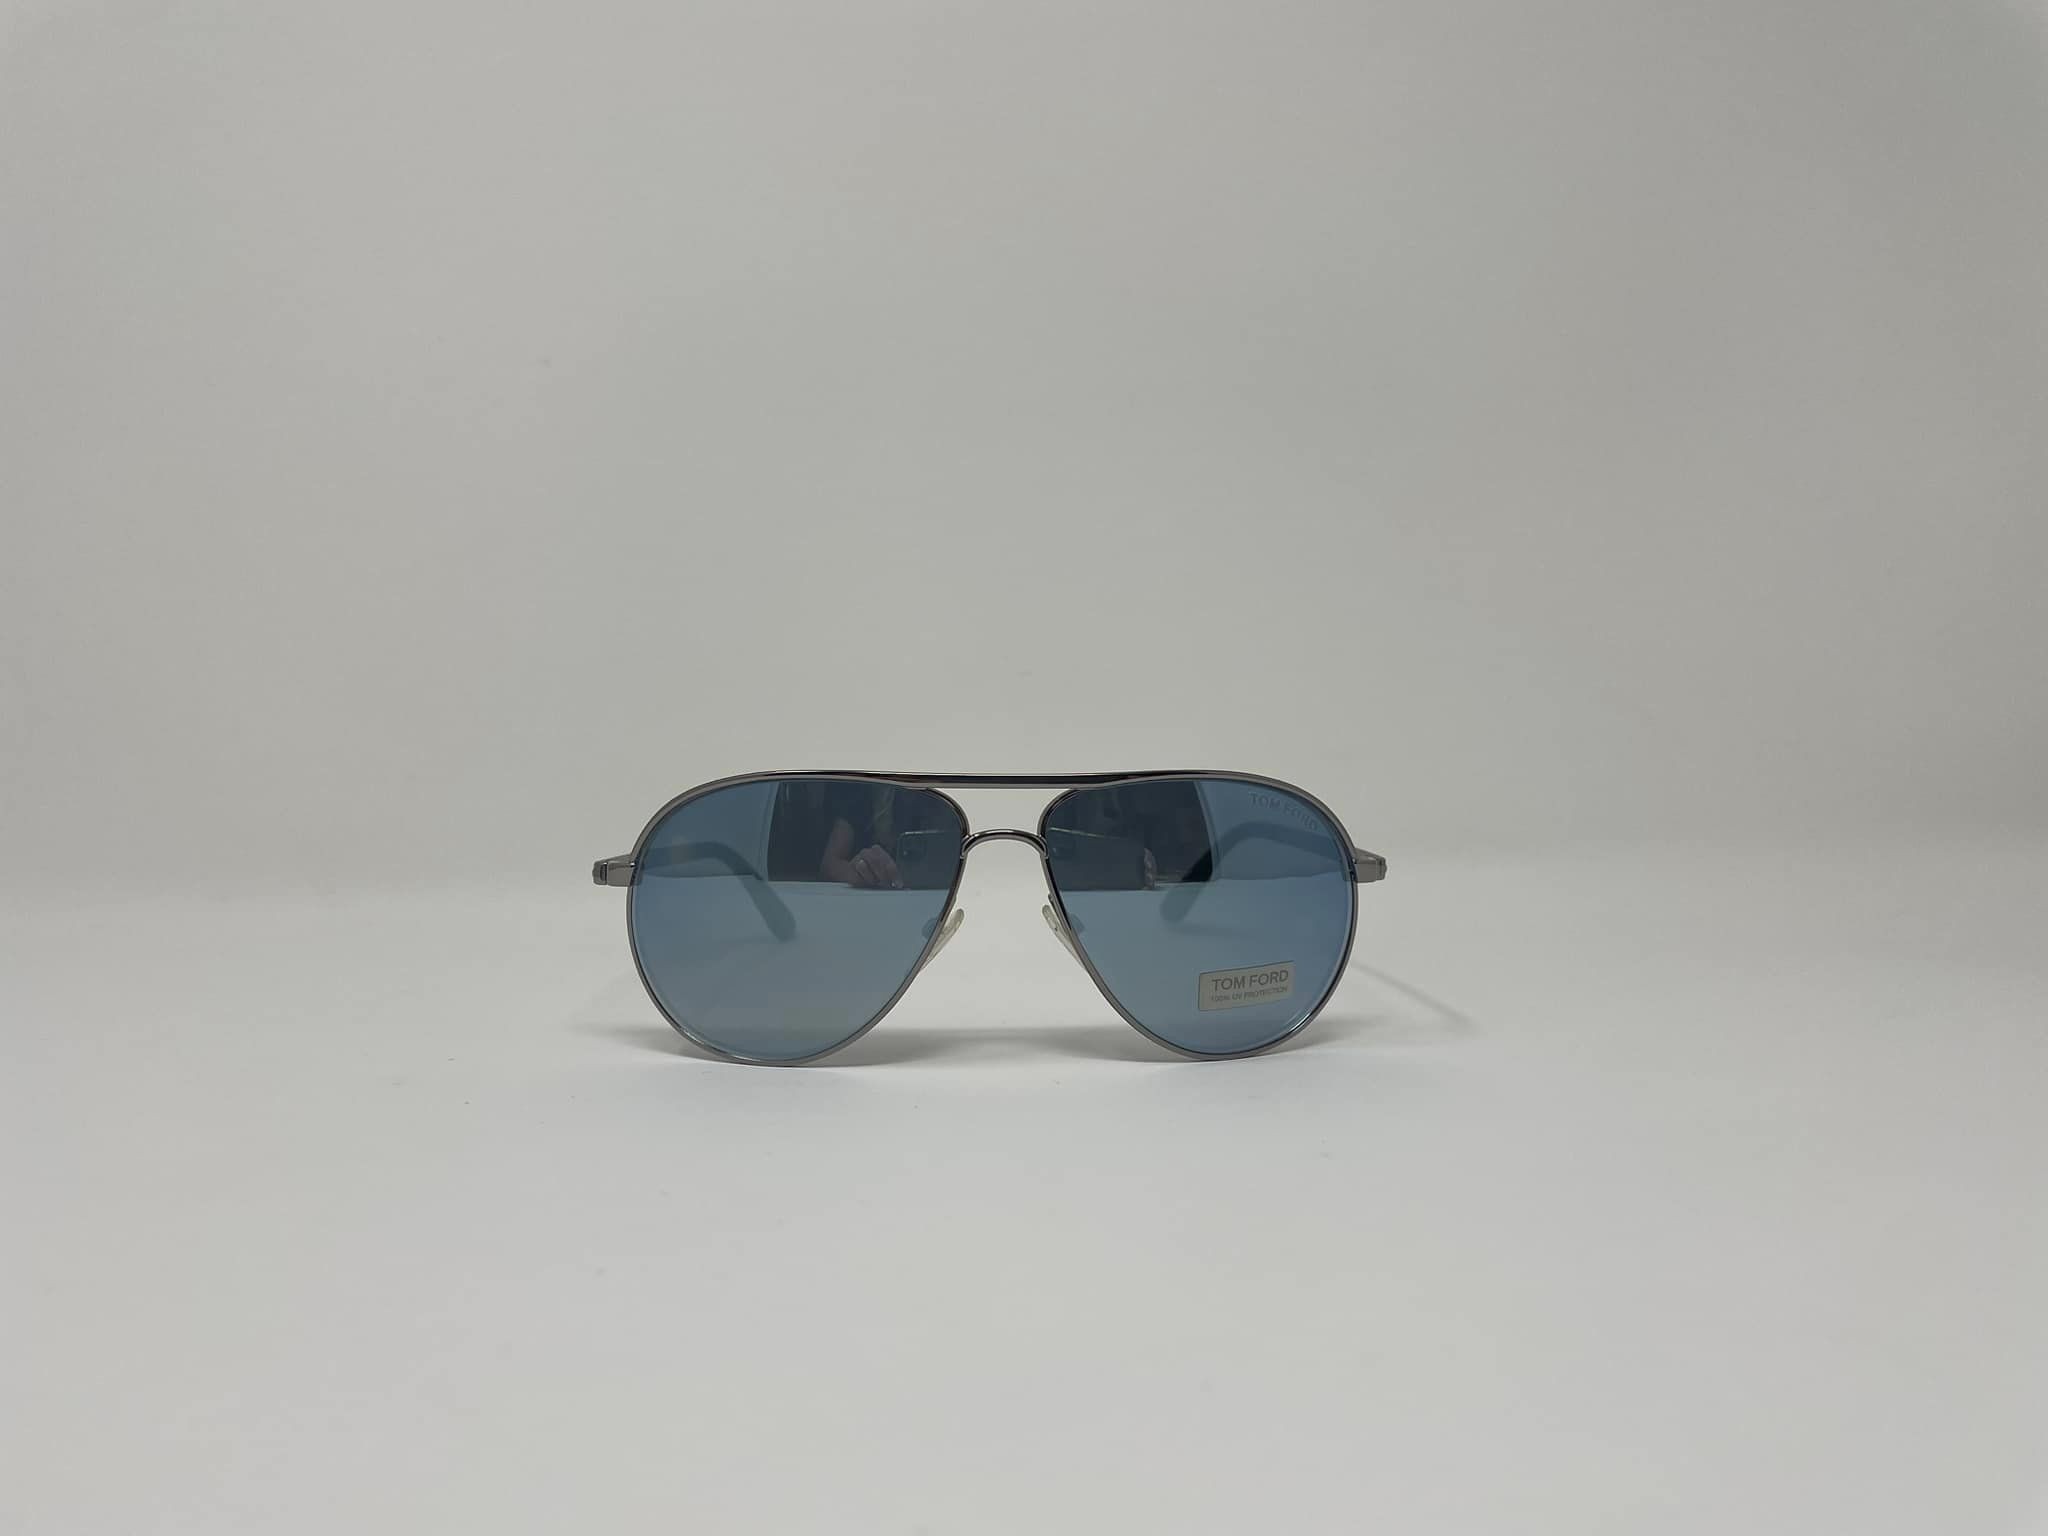 Tom Ford TF144 Men's sunglasses